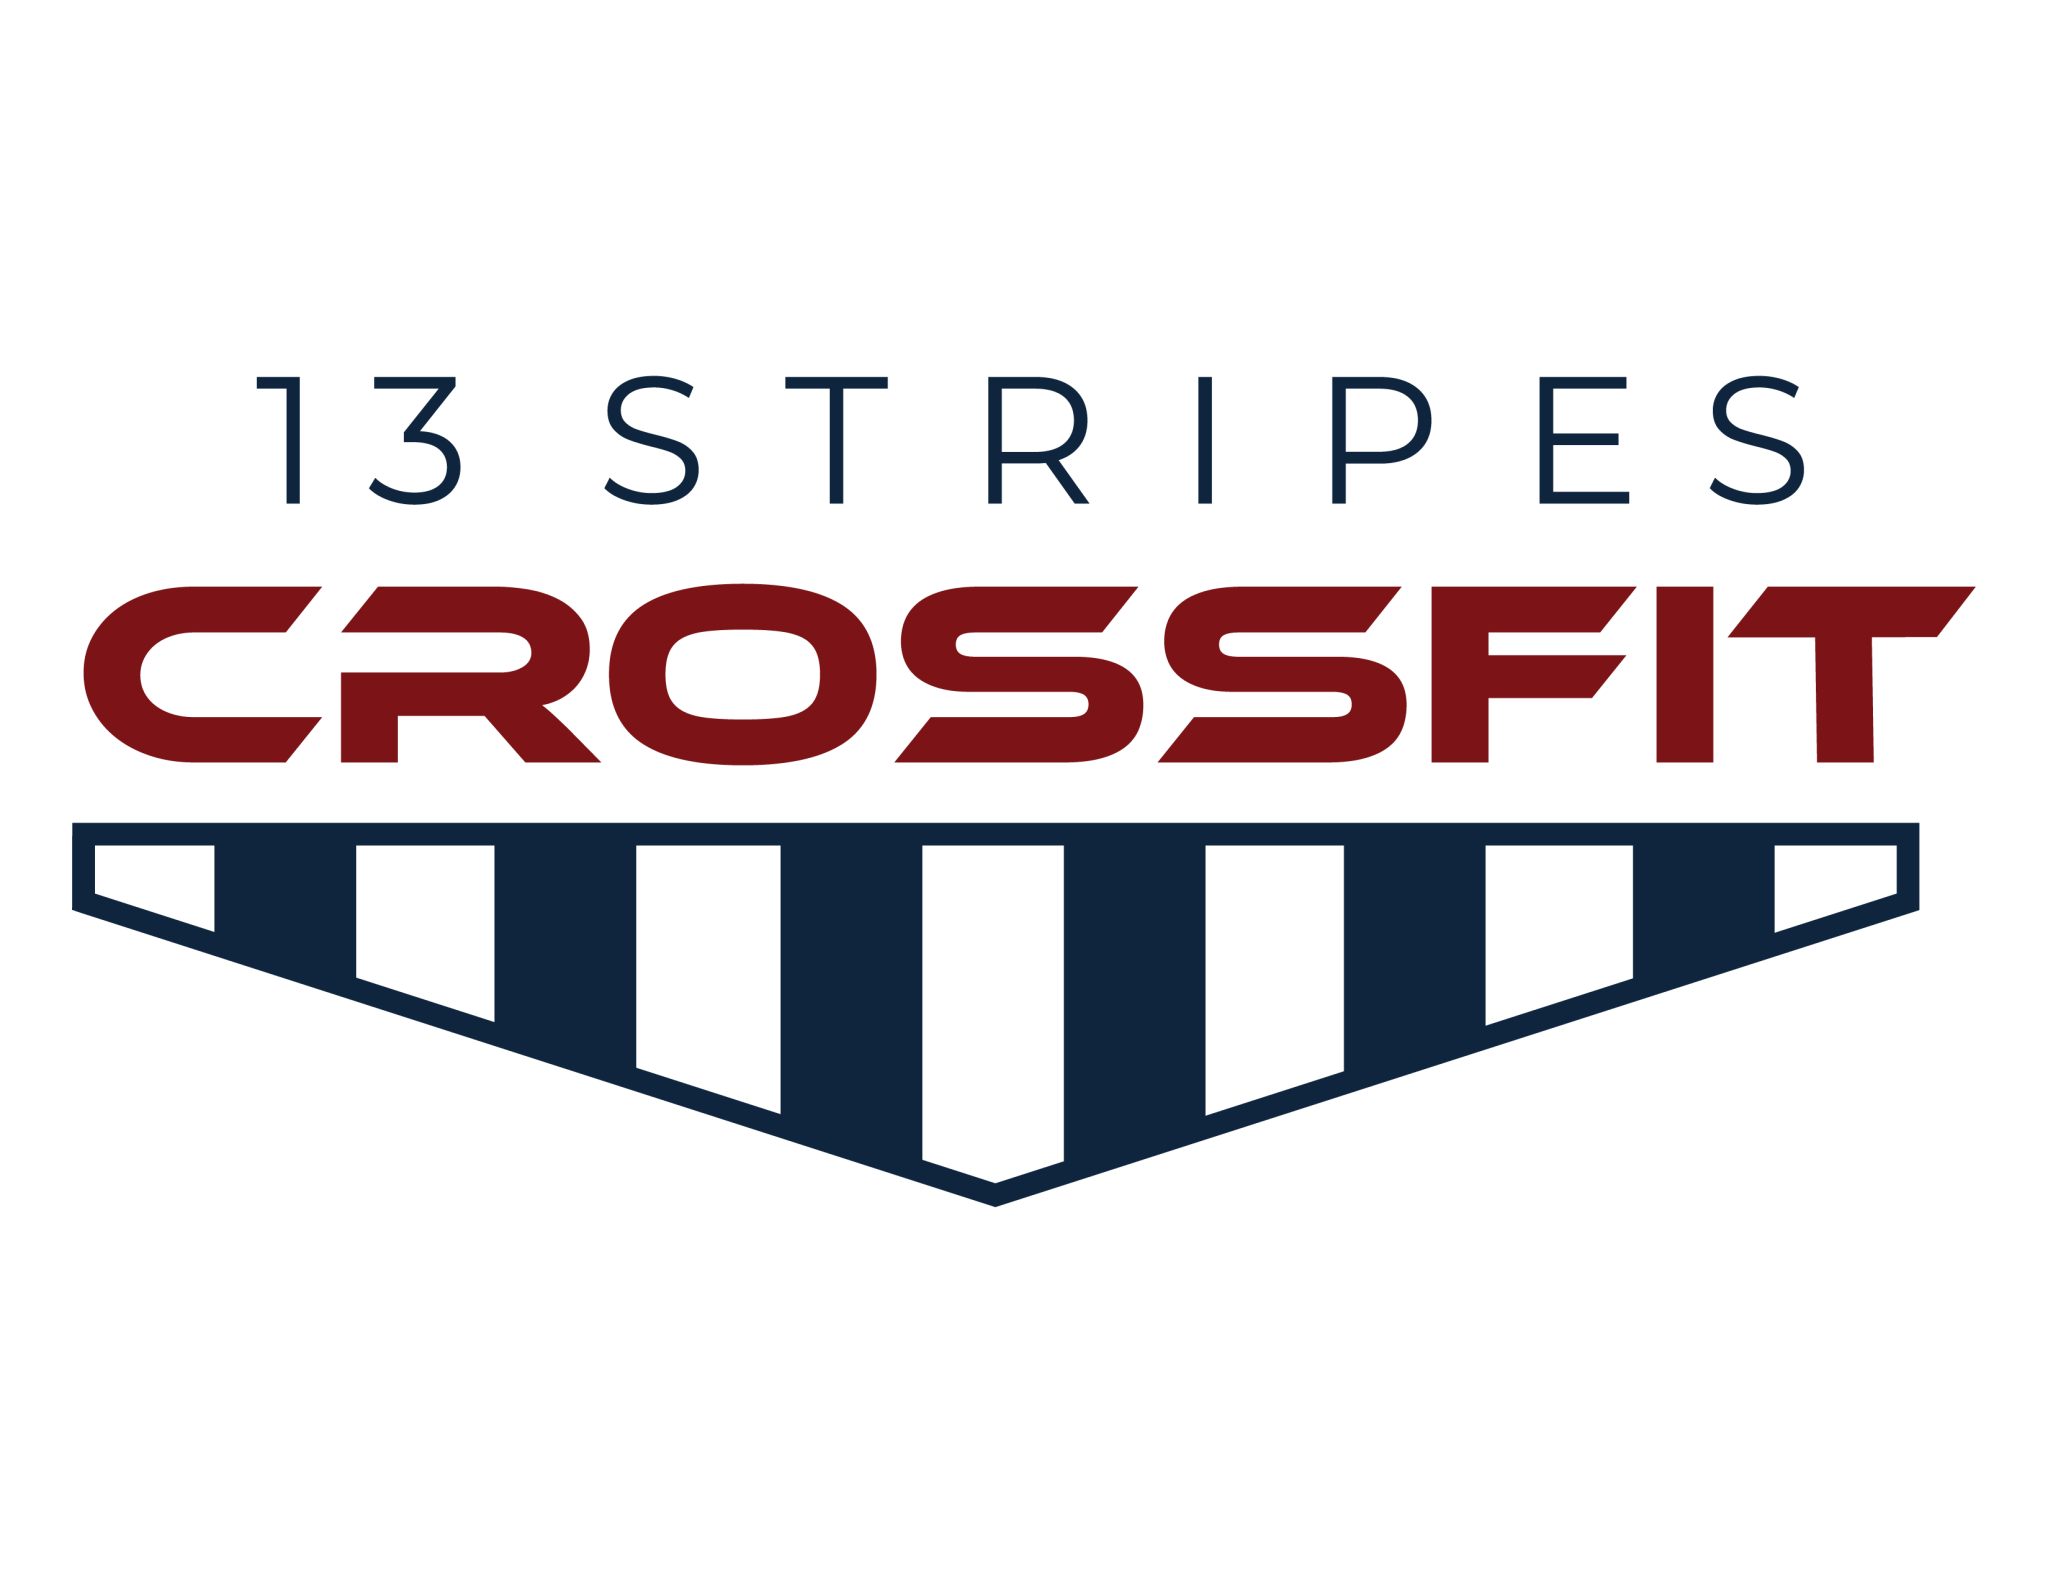 13 Stripes Fitness